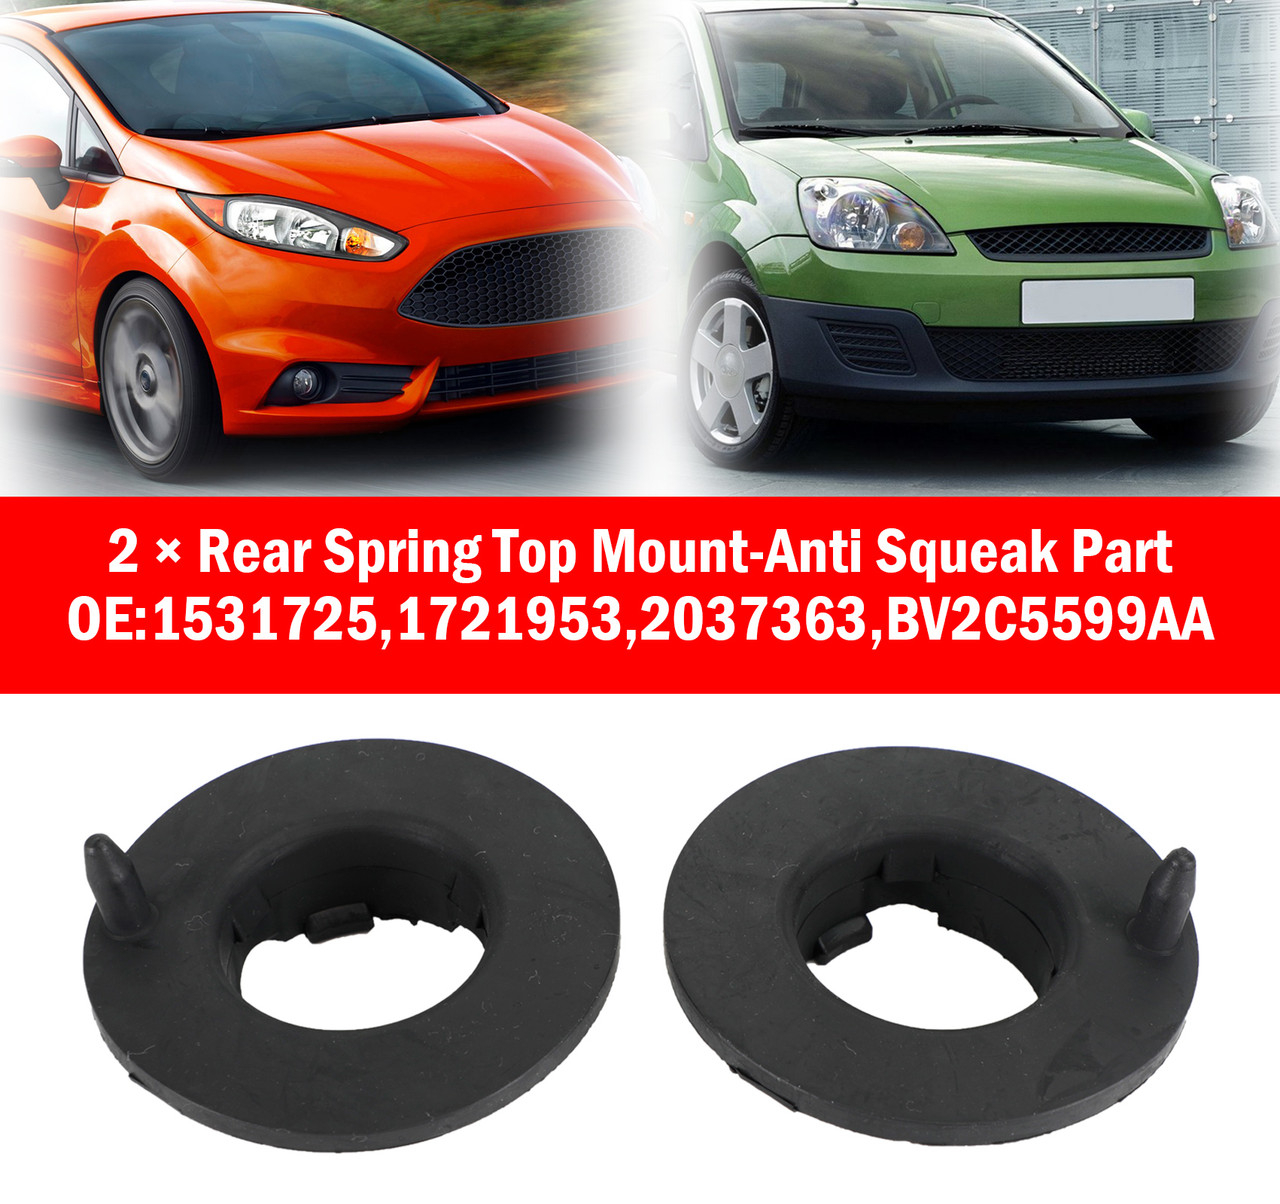 2PCS Rear Spring Top Mount-Anti Squeak Part for Ford Fiesta Mk7 09-17 1531725